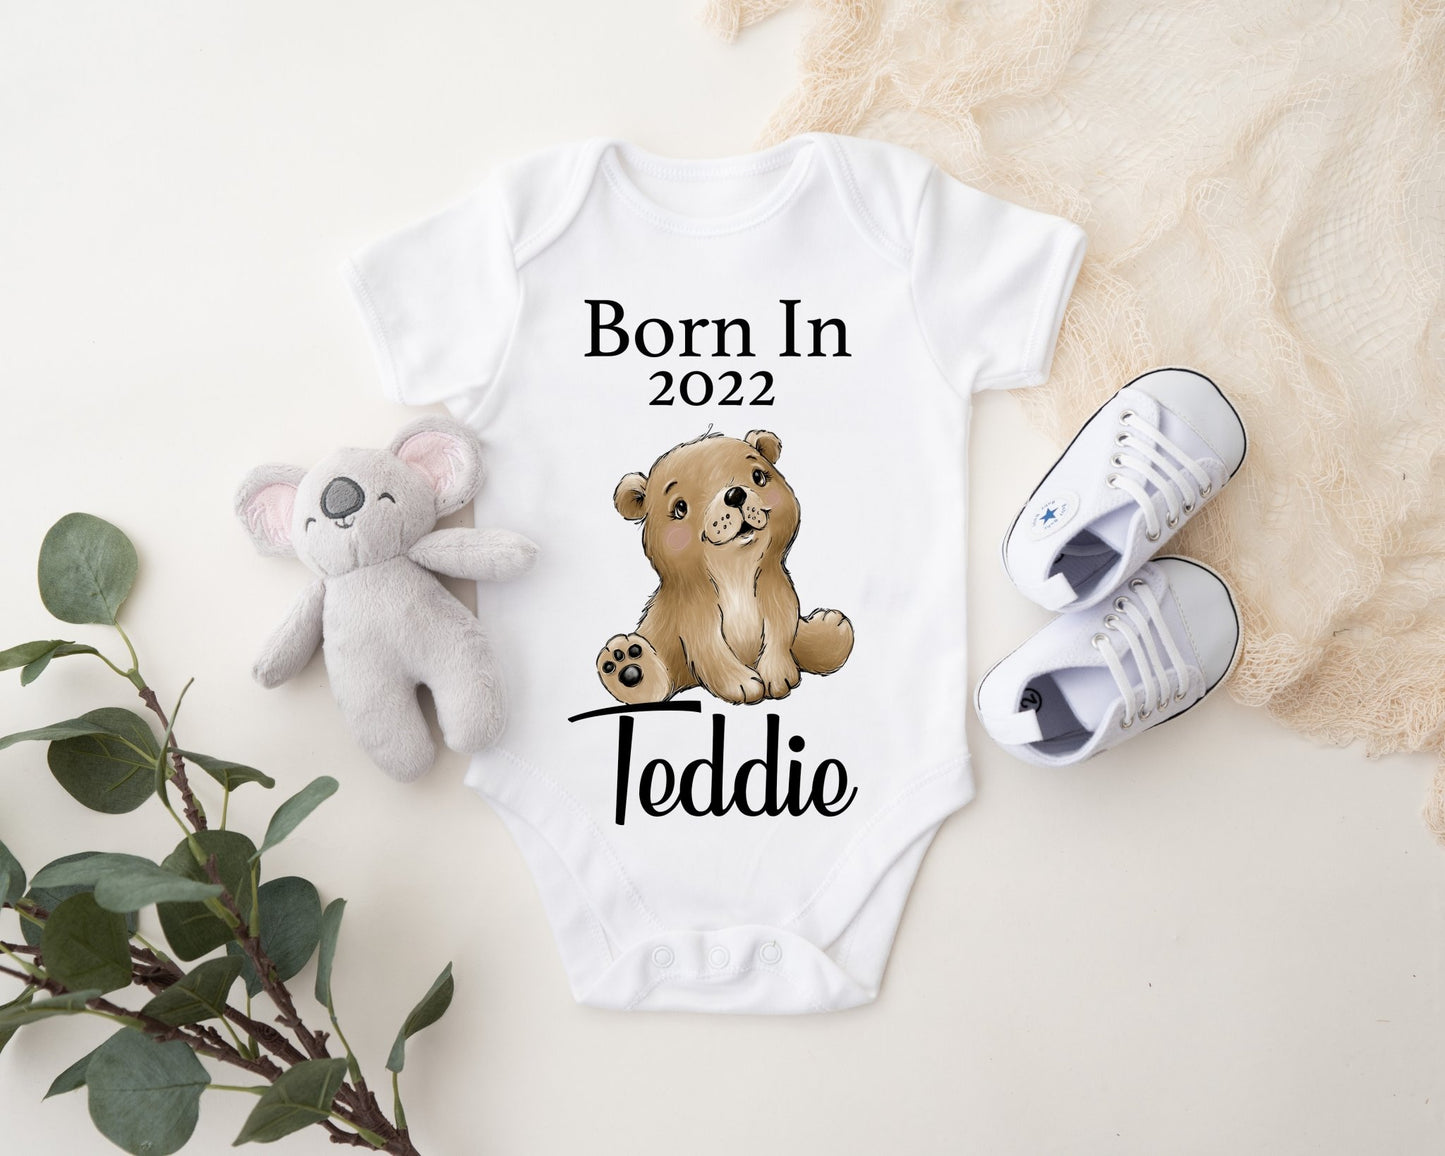 Born In 2022 Vest - Bear Boy Print